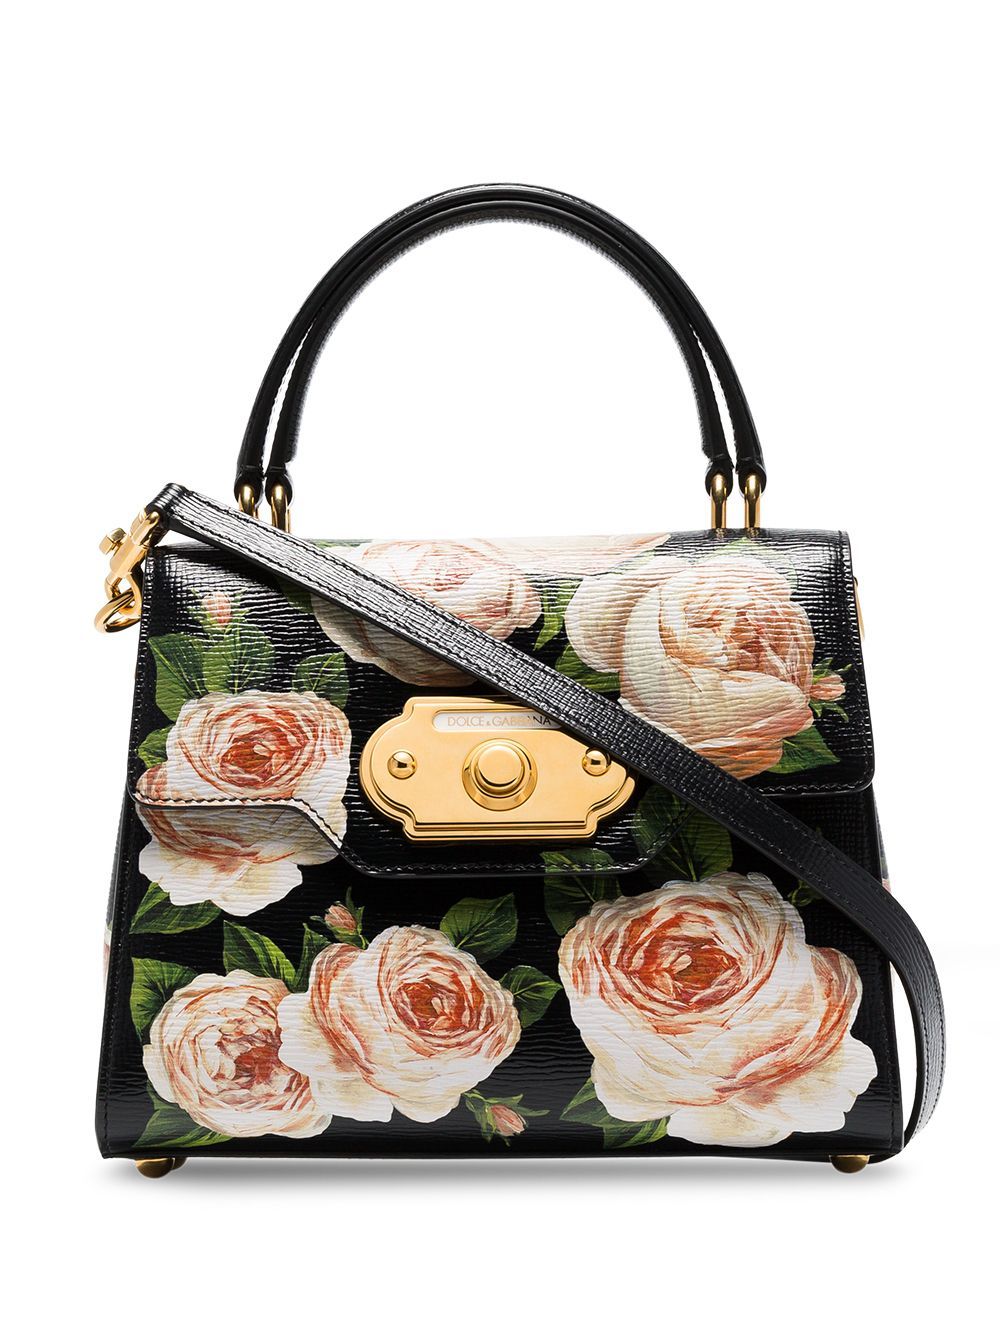 Dolce & Gabbana black Welcome Rose print leather shoulder bag | FarFetch US